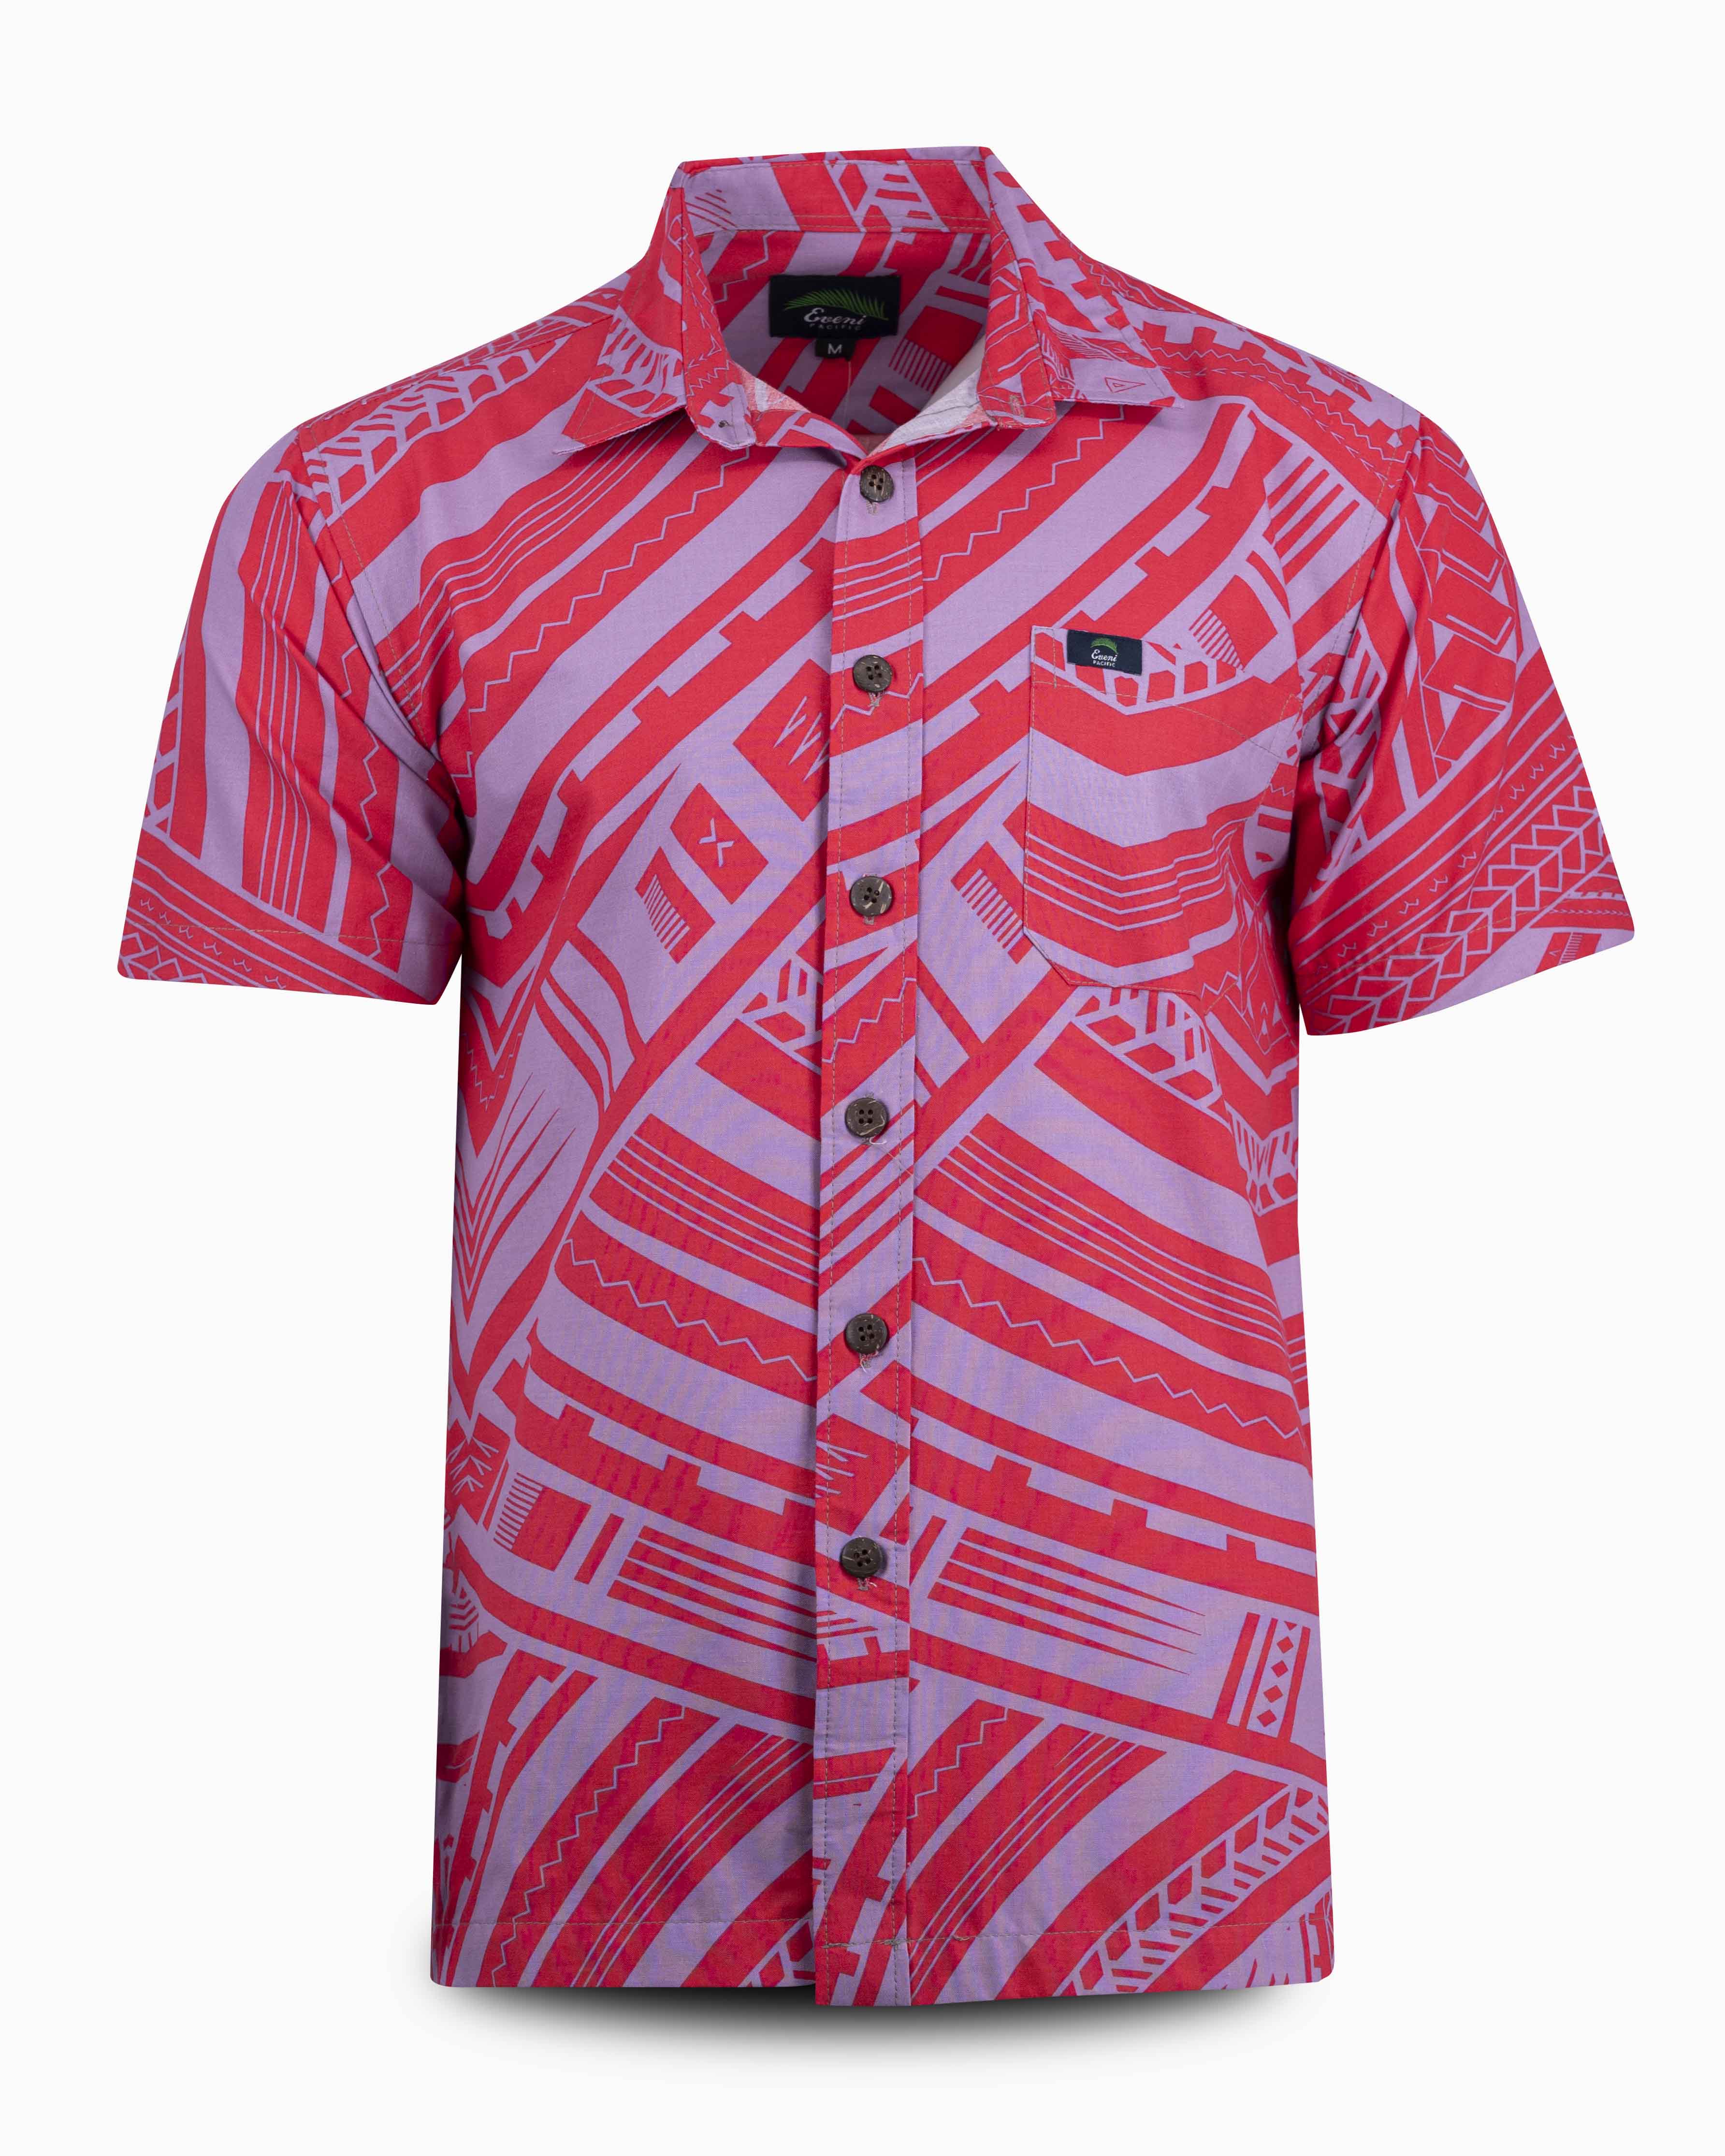 Eveni Pacific Men's Classic Shirt - MATILE PURPLE